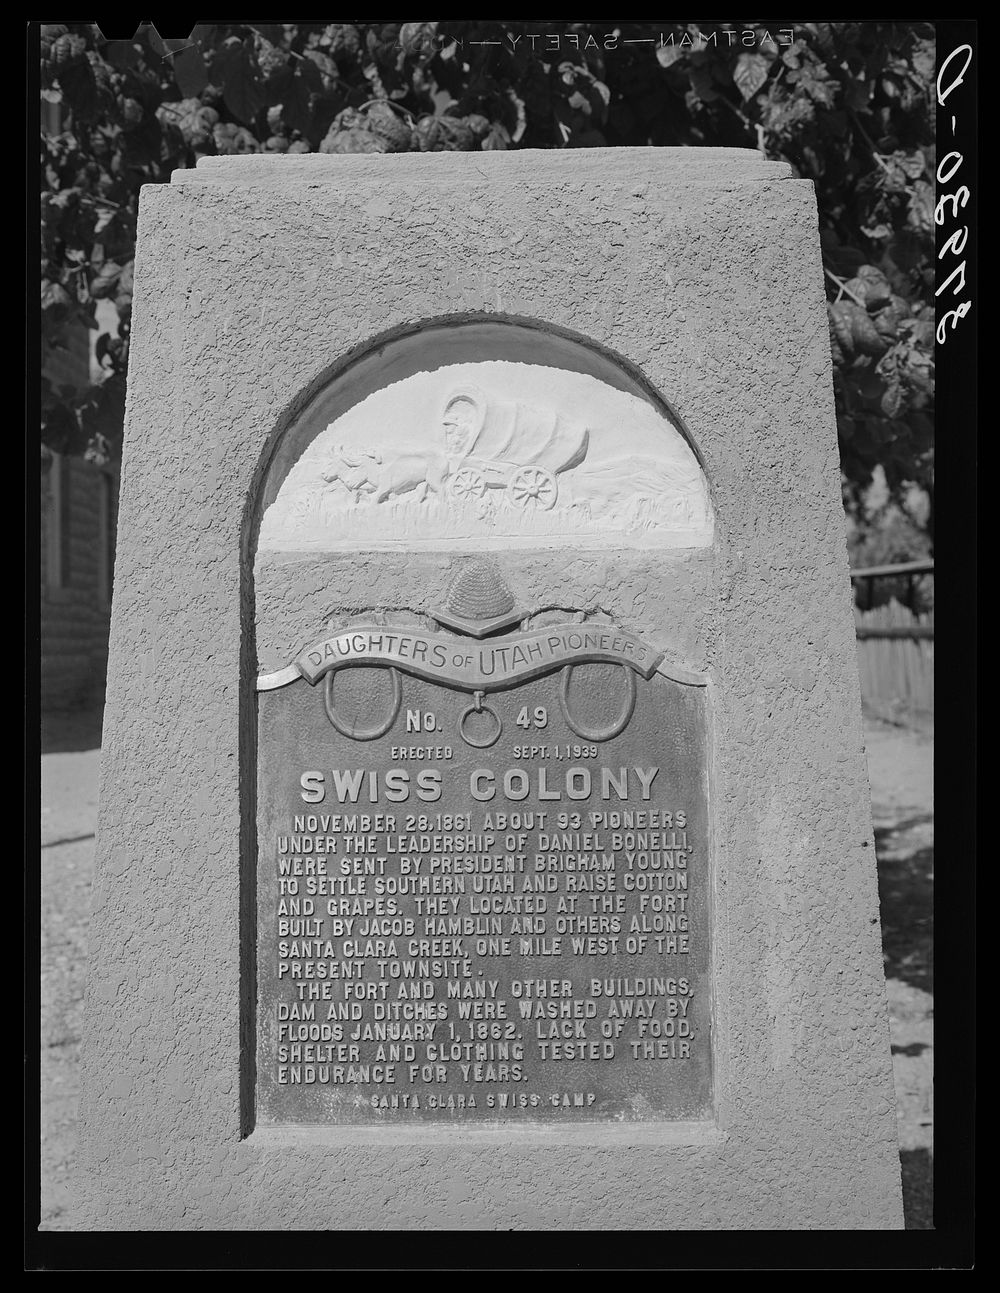 Monument to the pioneers. Santa Clara, Utah. See general caption by Russell Lee